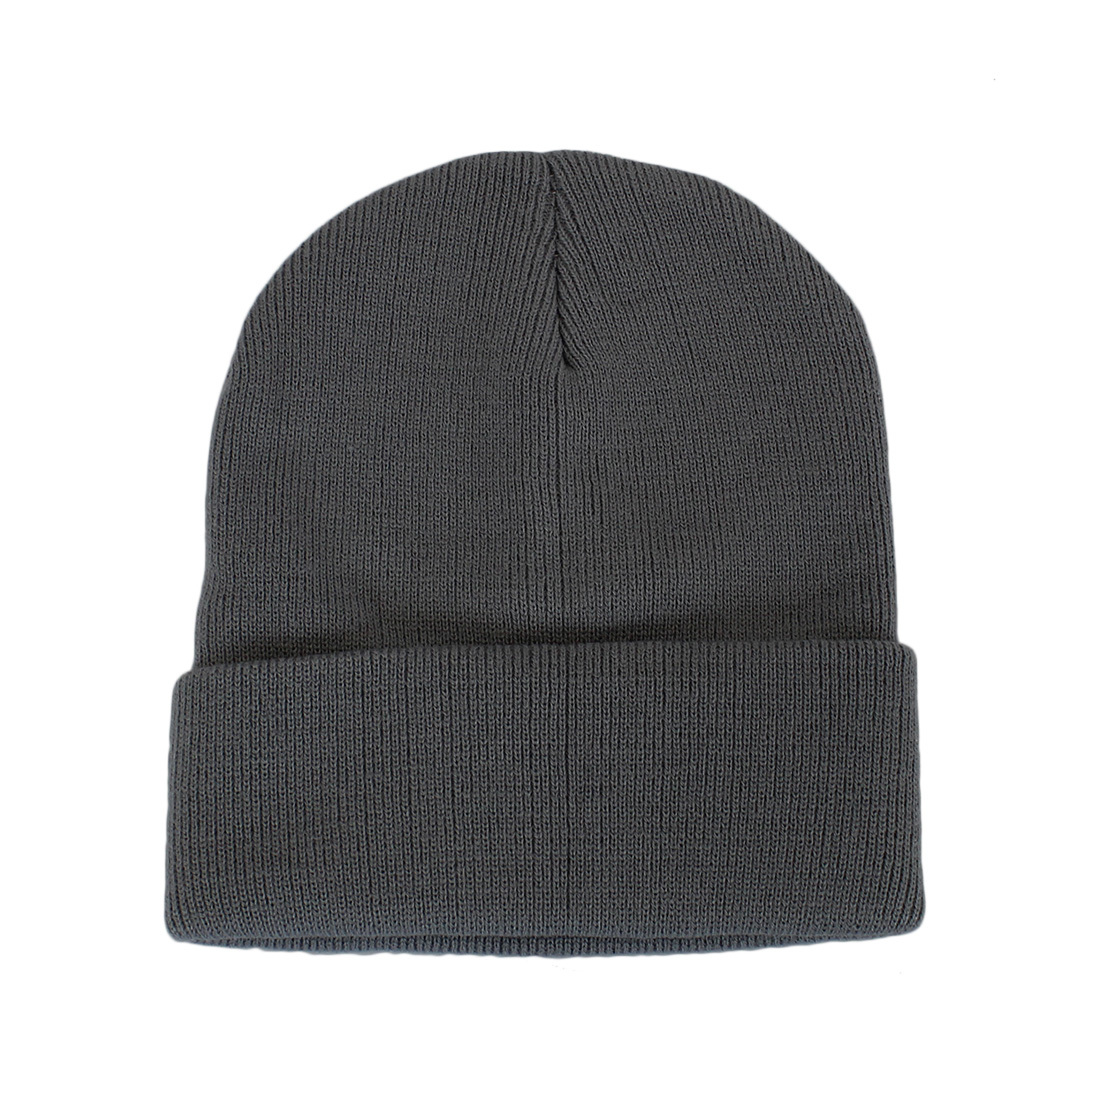 * Plain knitted winter cap